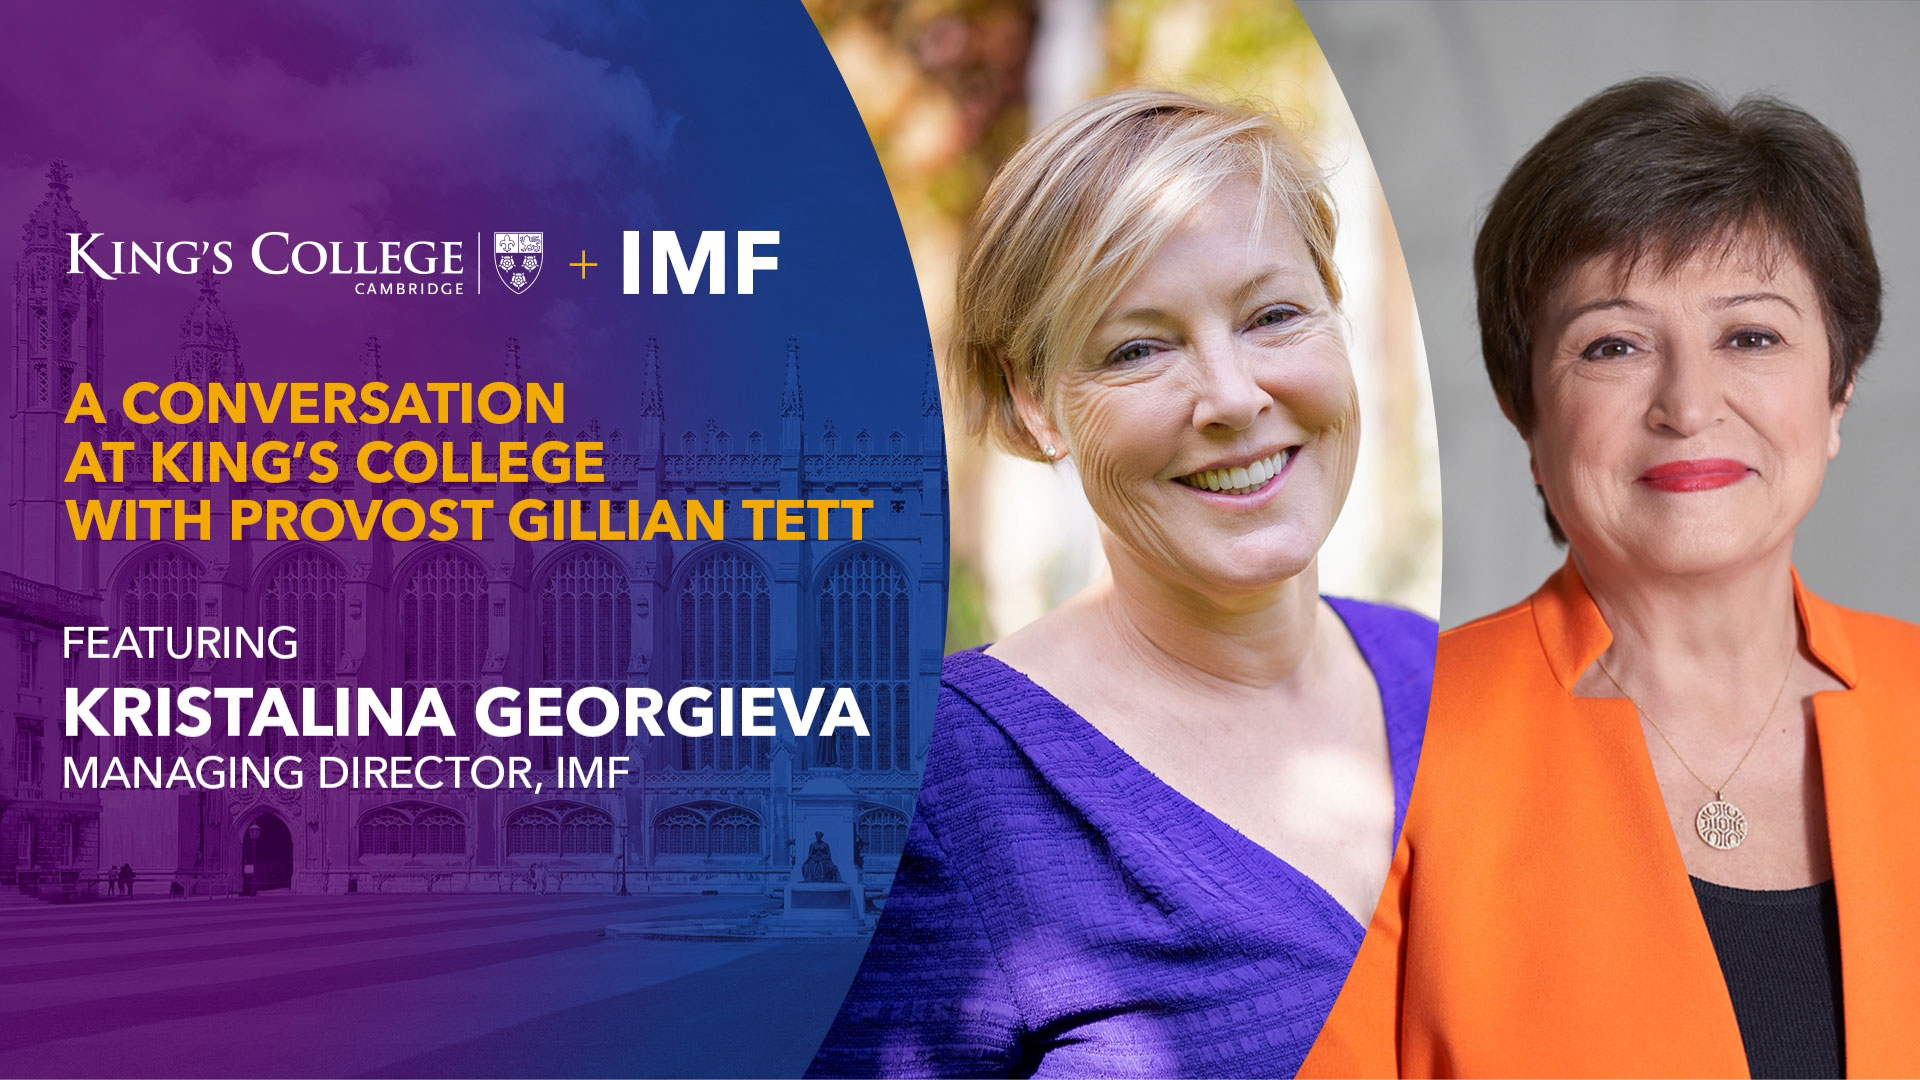 IMF Managing Director’s Keynote Speech at King’s College, Cambridge, followed by a conversation with provost Gillian Tett featuring Kristalina Georgieva